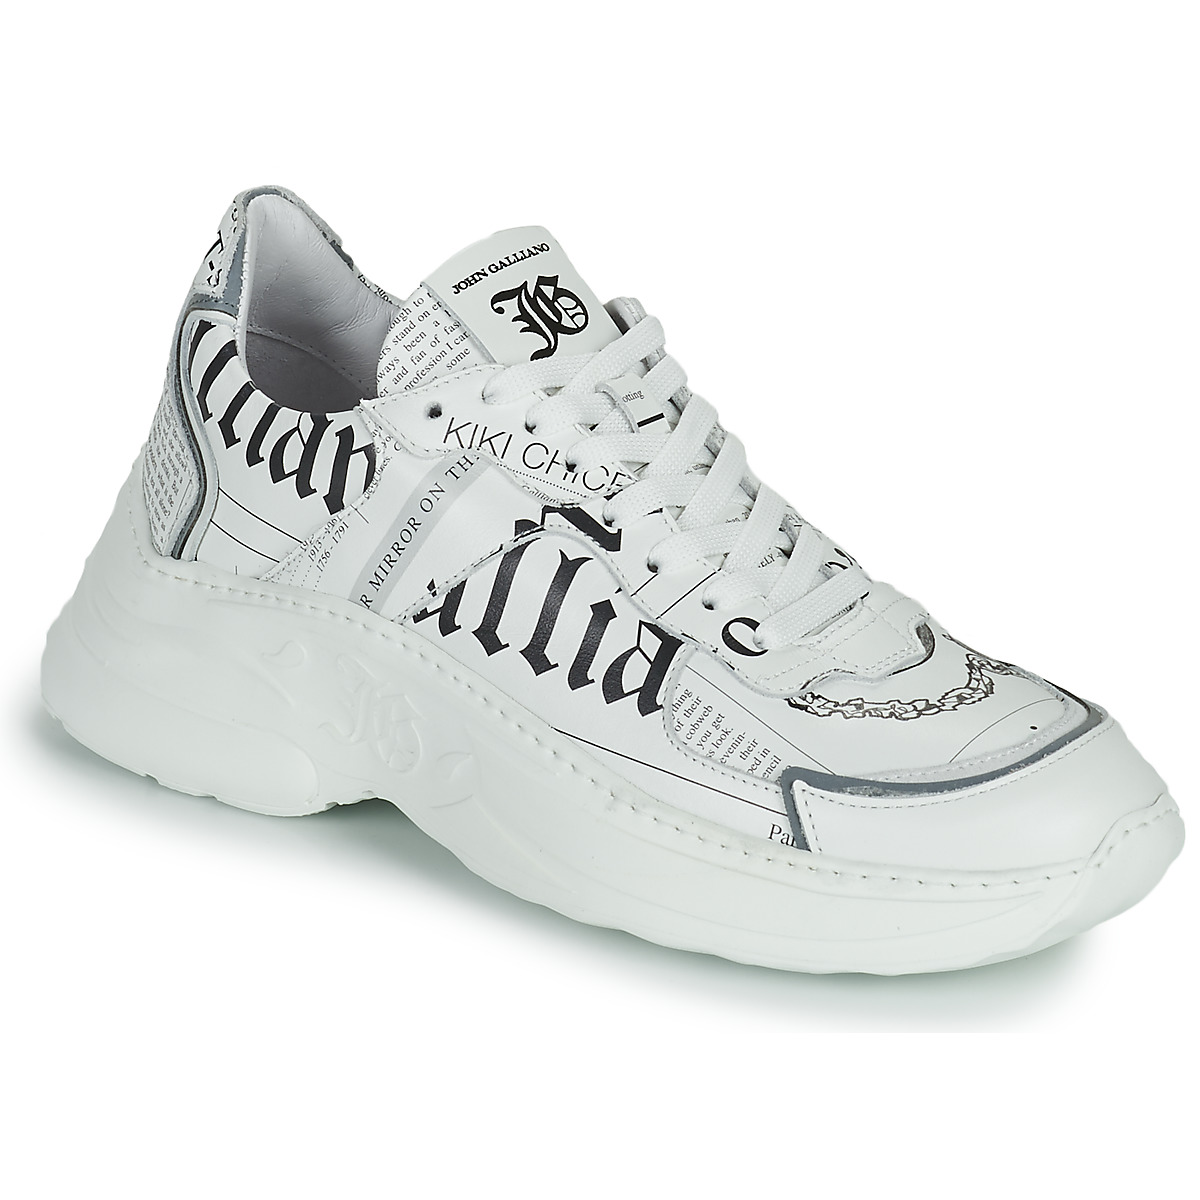 john galliano  sofia  women's shoes (trainers) in white